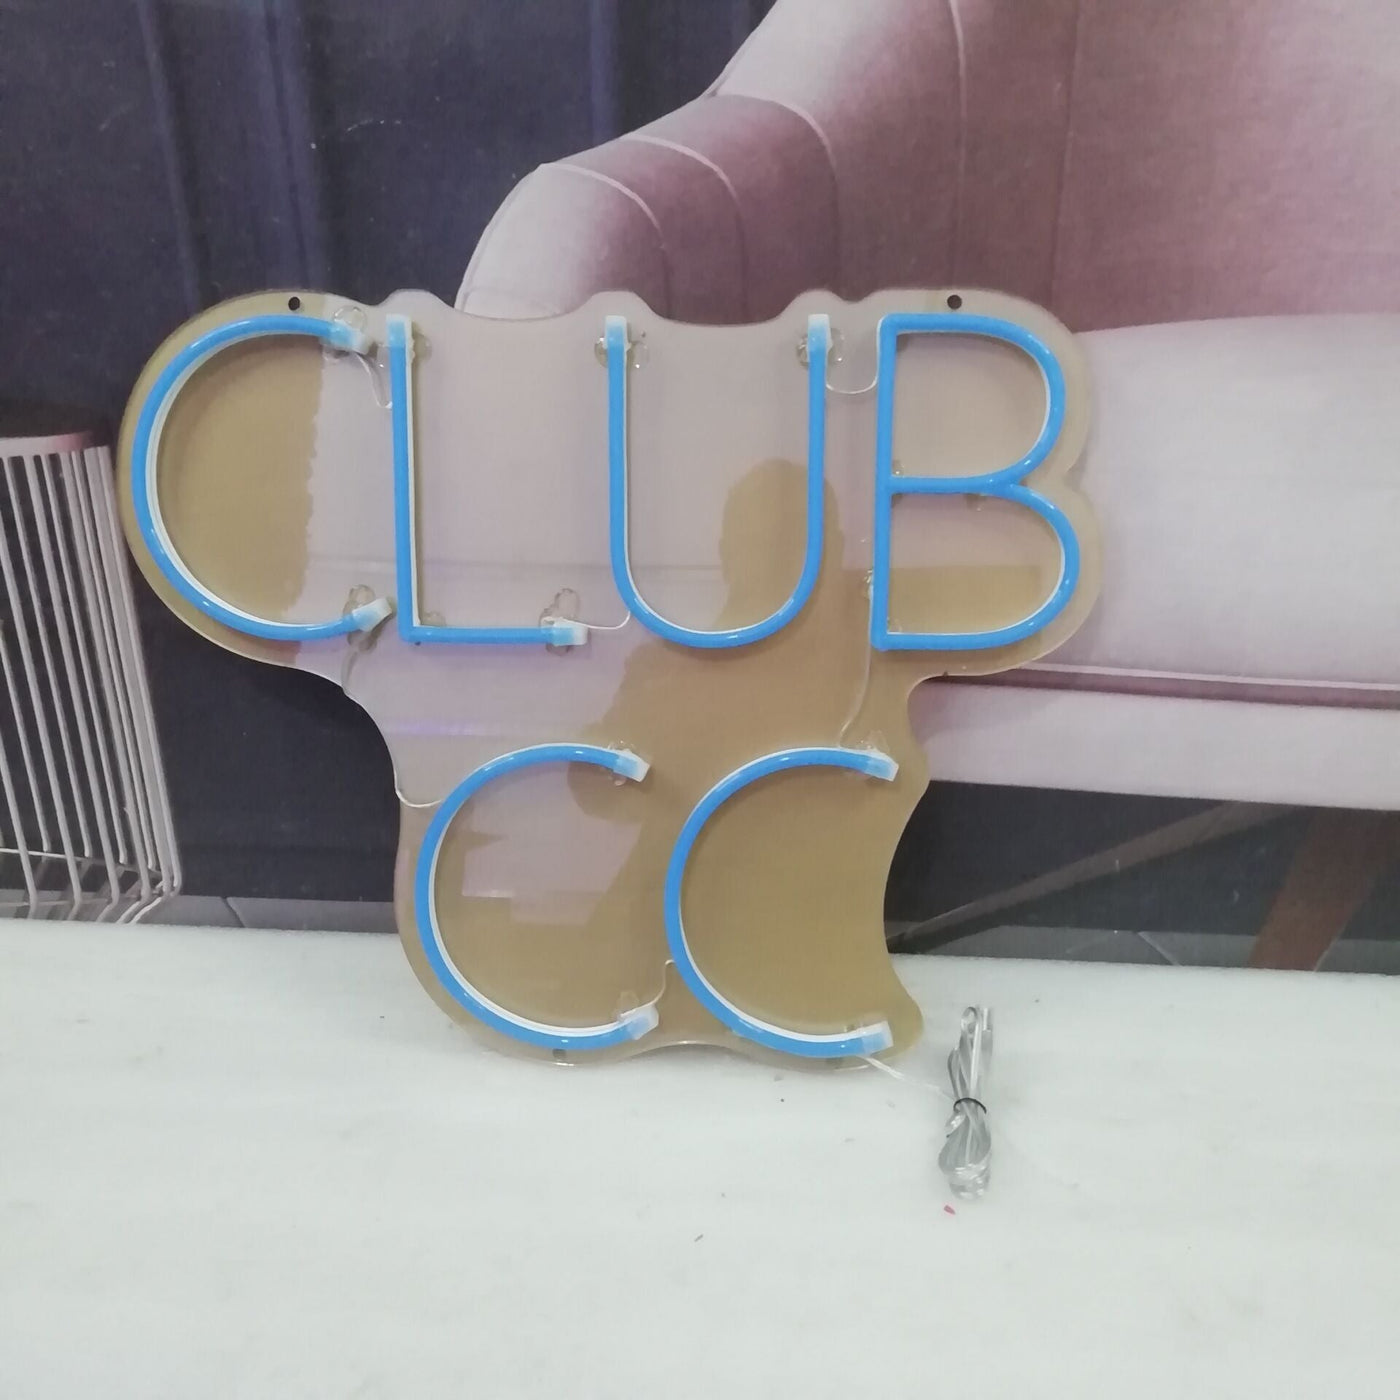 CLUB CC Neon Signs Led Neon Lighting